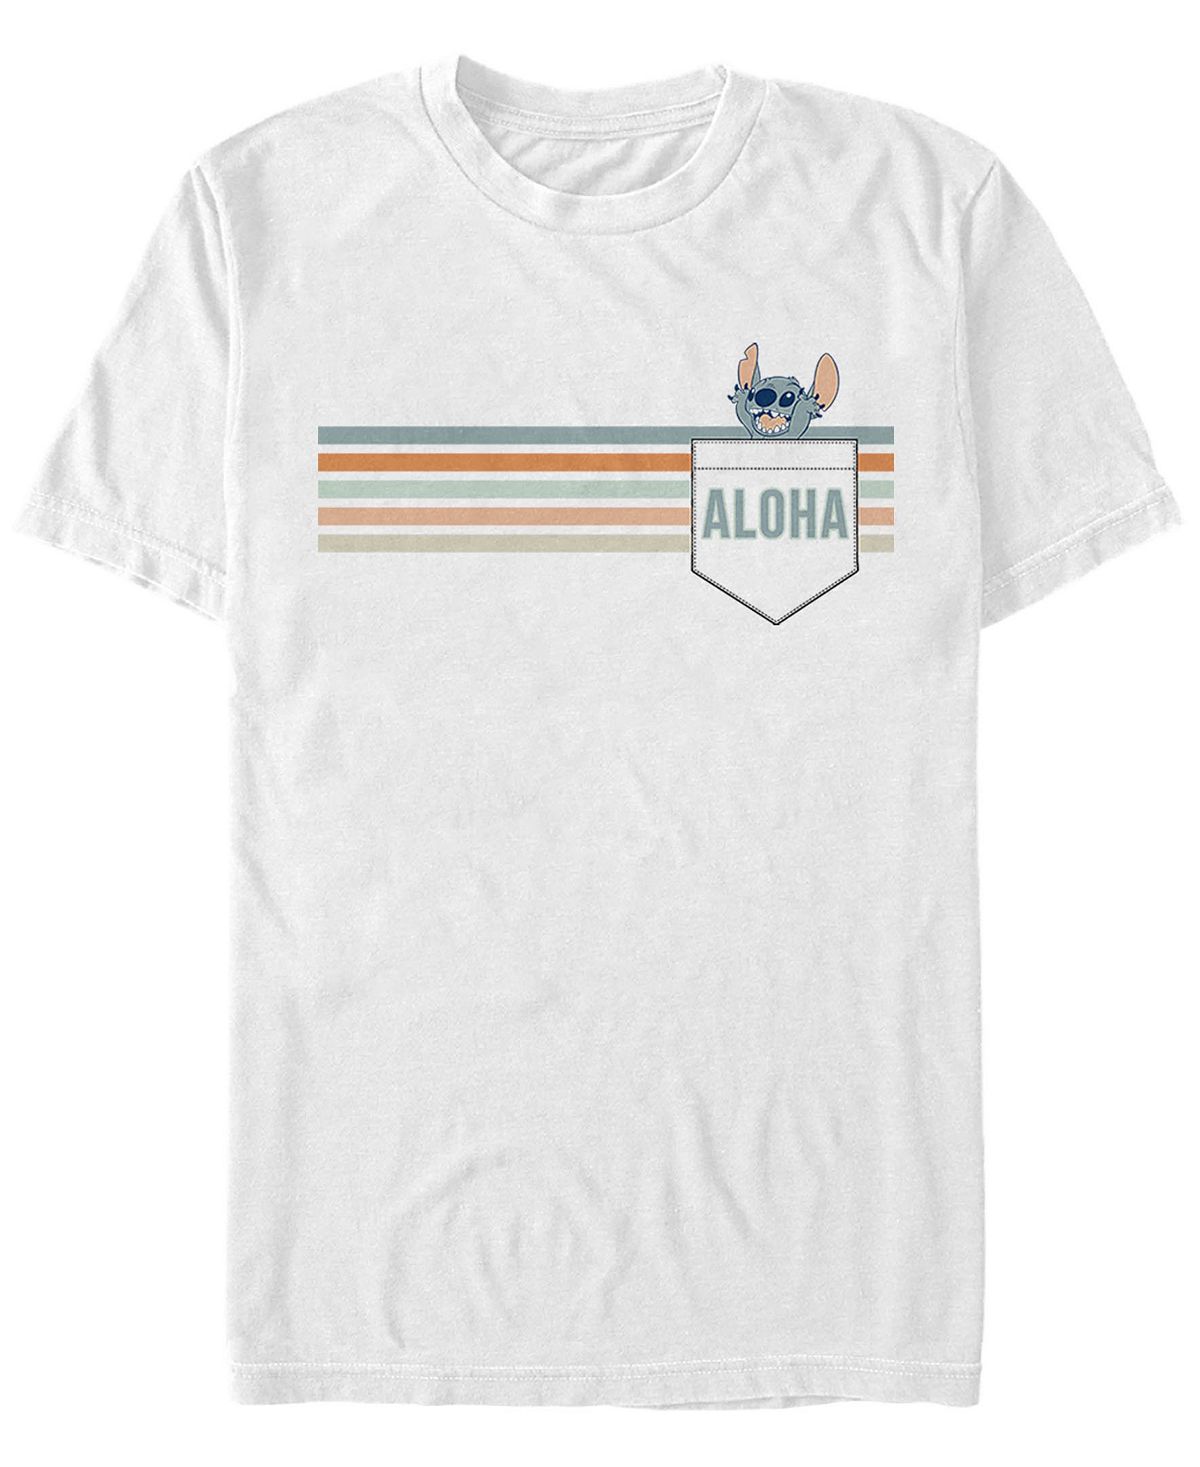 Мужская футболка stitch aloha с коротким рукавом Fifth Sun мужская футболка с коротким рукавом winnie poster fifth sun